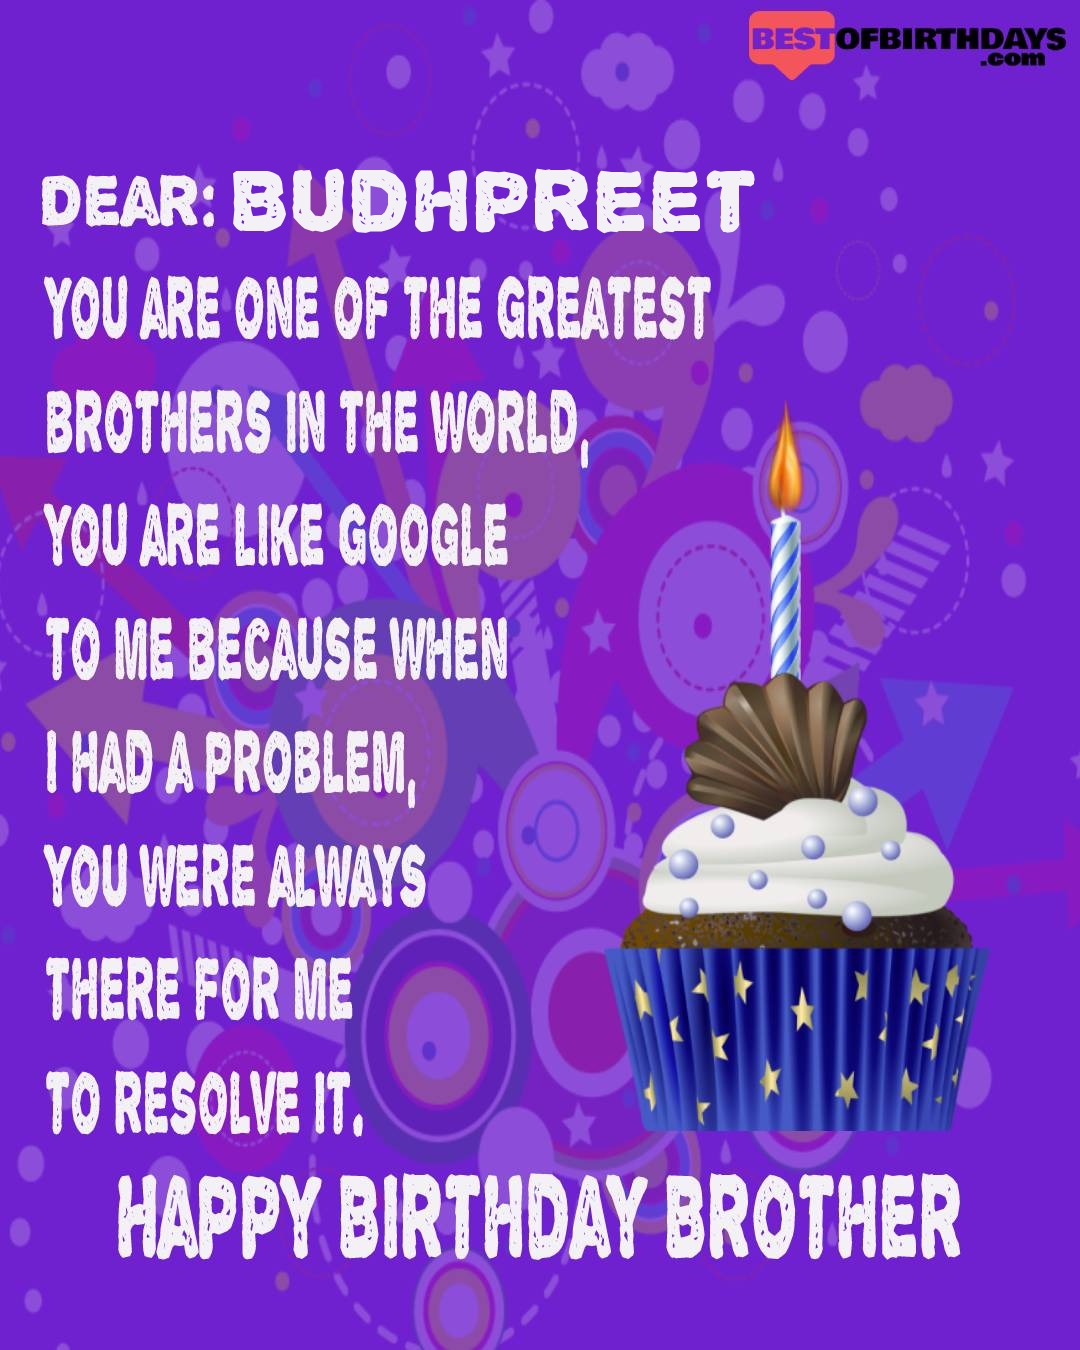 Happy birthday budhpreet bhai brother bro